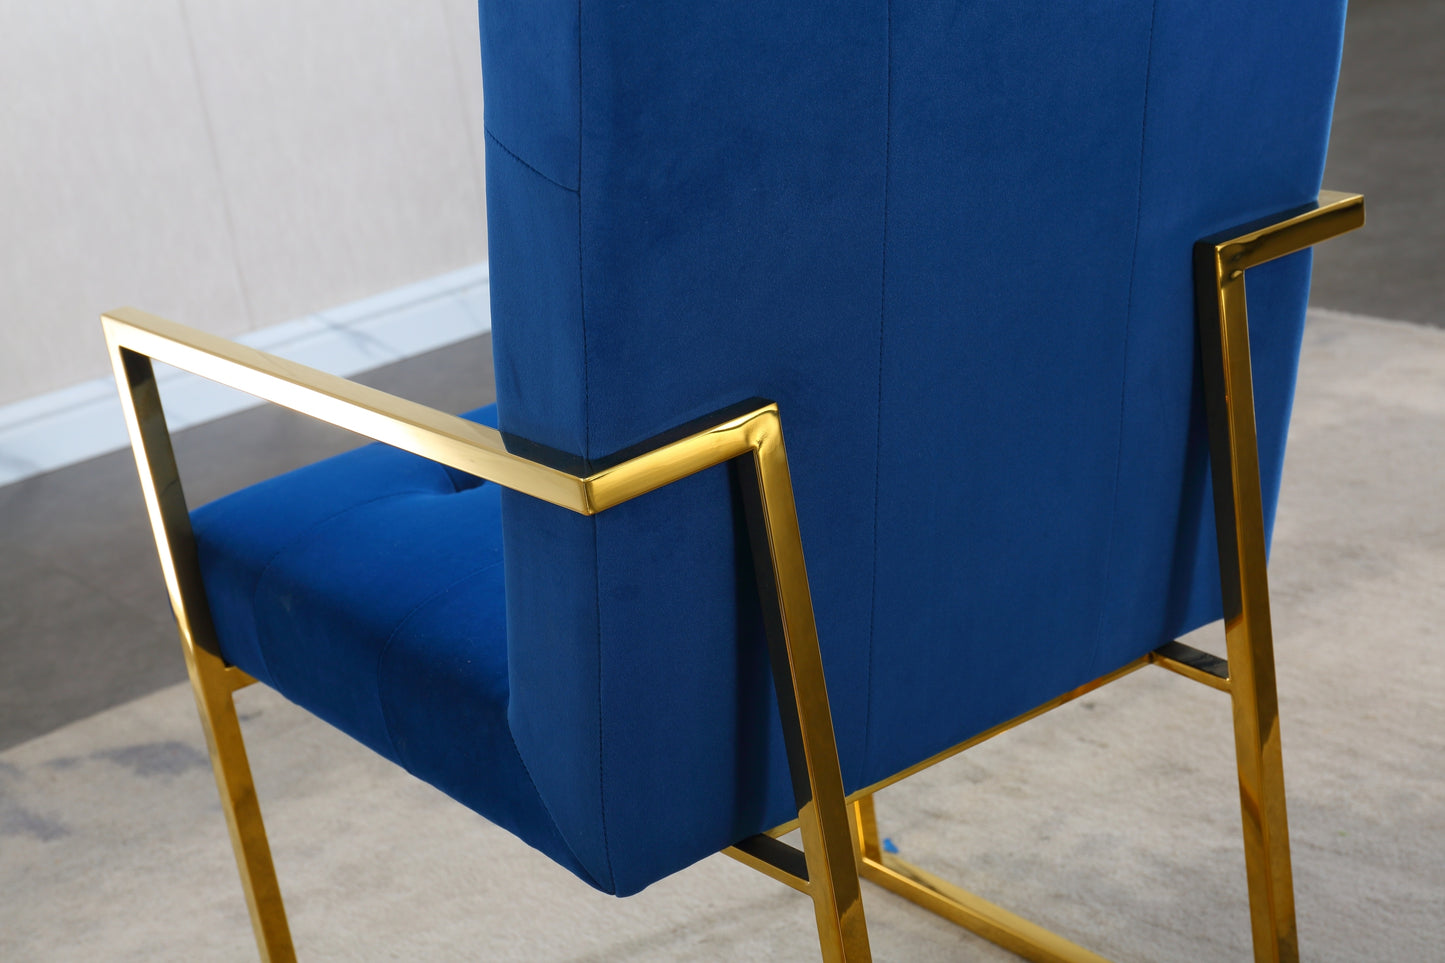 Modern Velvet Dining Arm Chair Set of 1, Tufted Design and Gold Finish Stainless Base